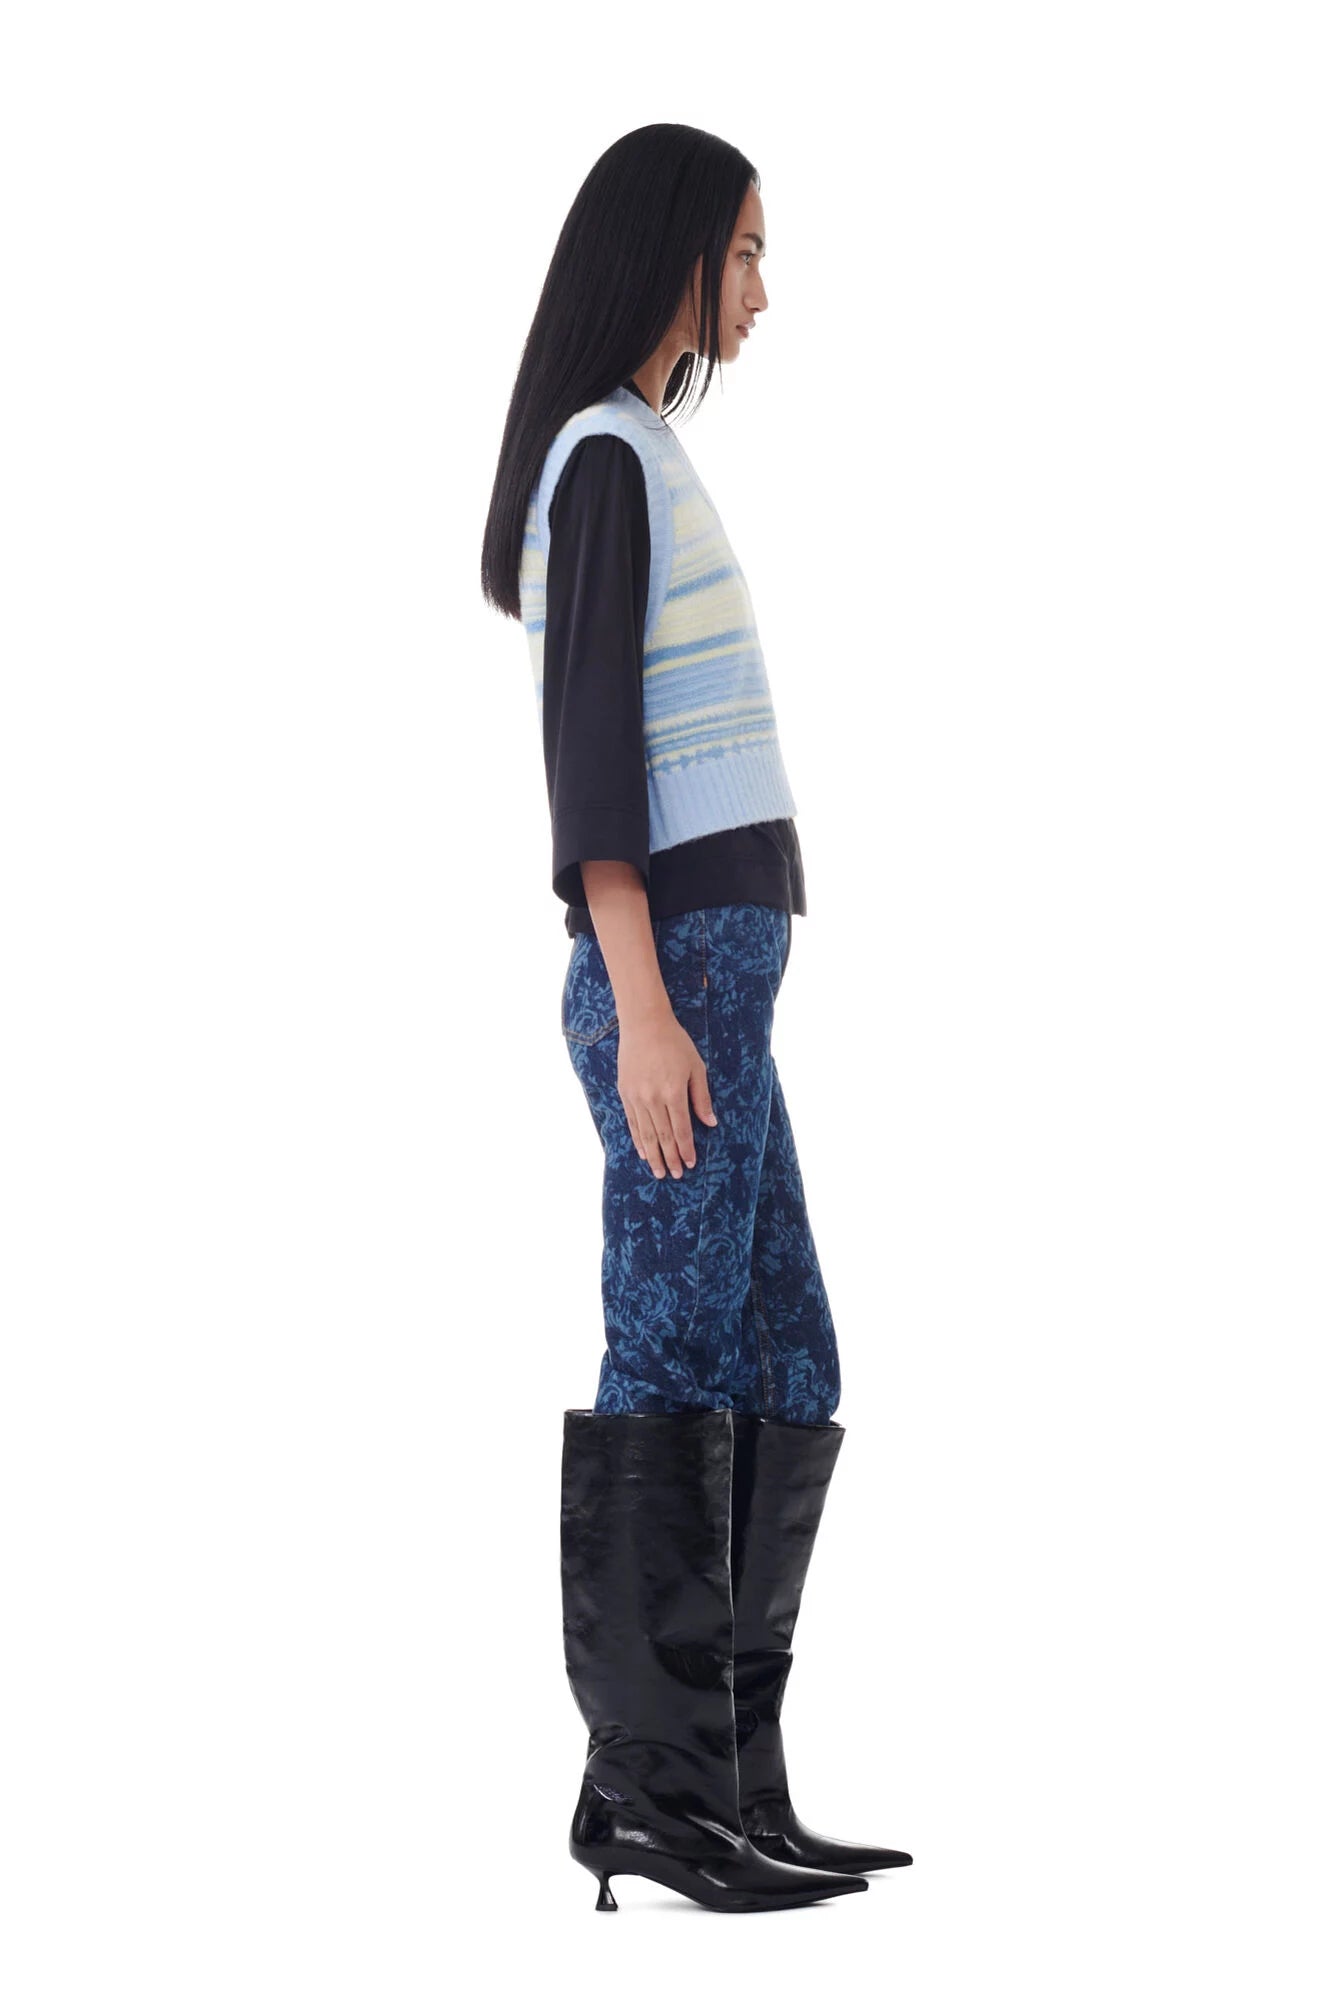 Blue Striped Soft Wool Vest Sweaters &amp; Knits Ganni   